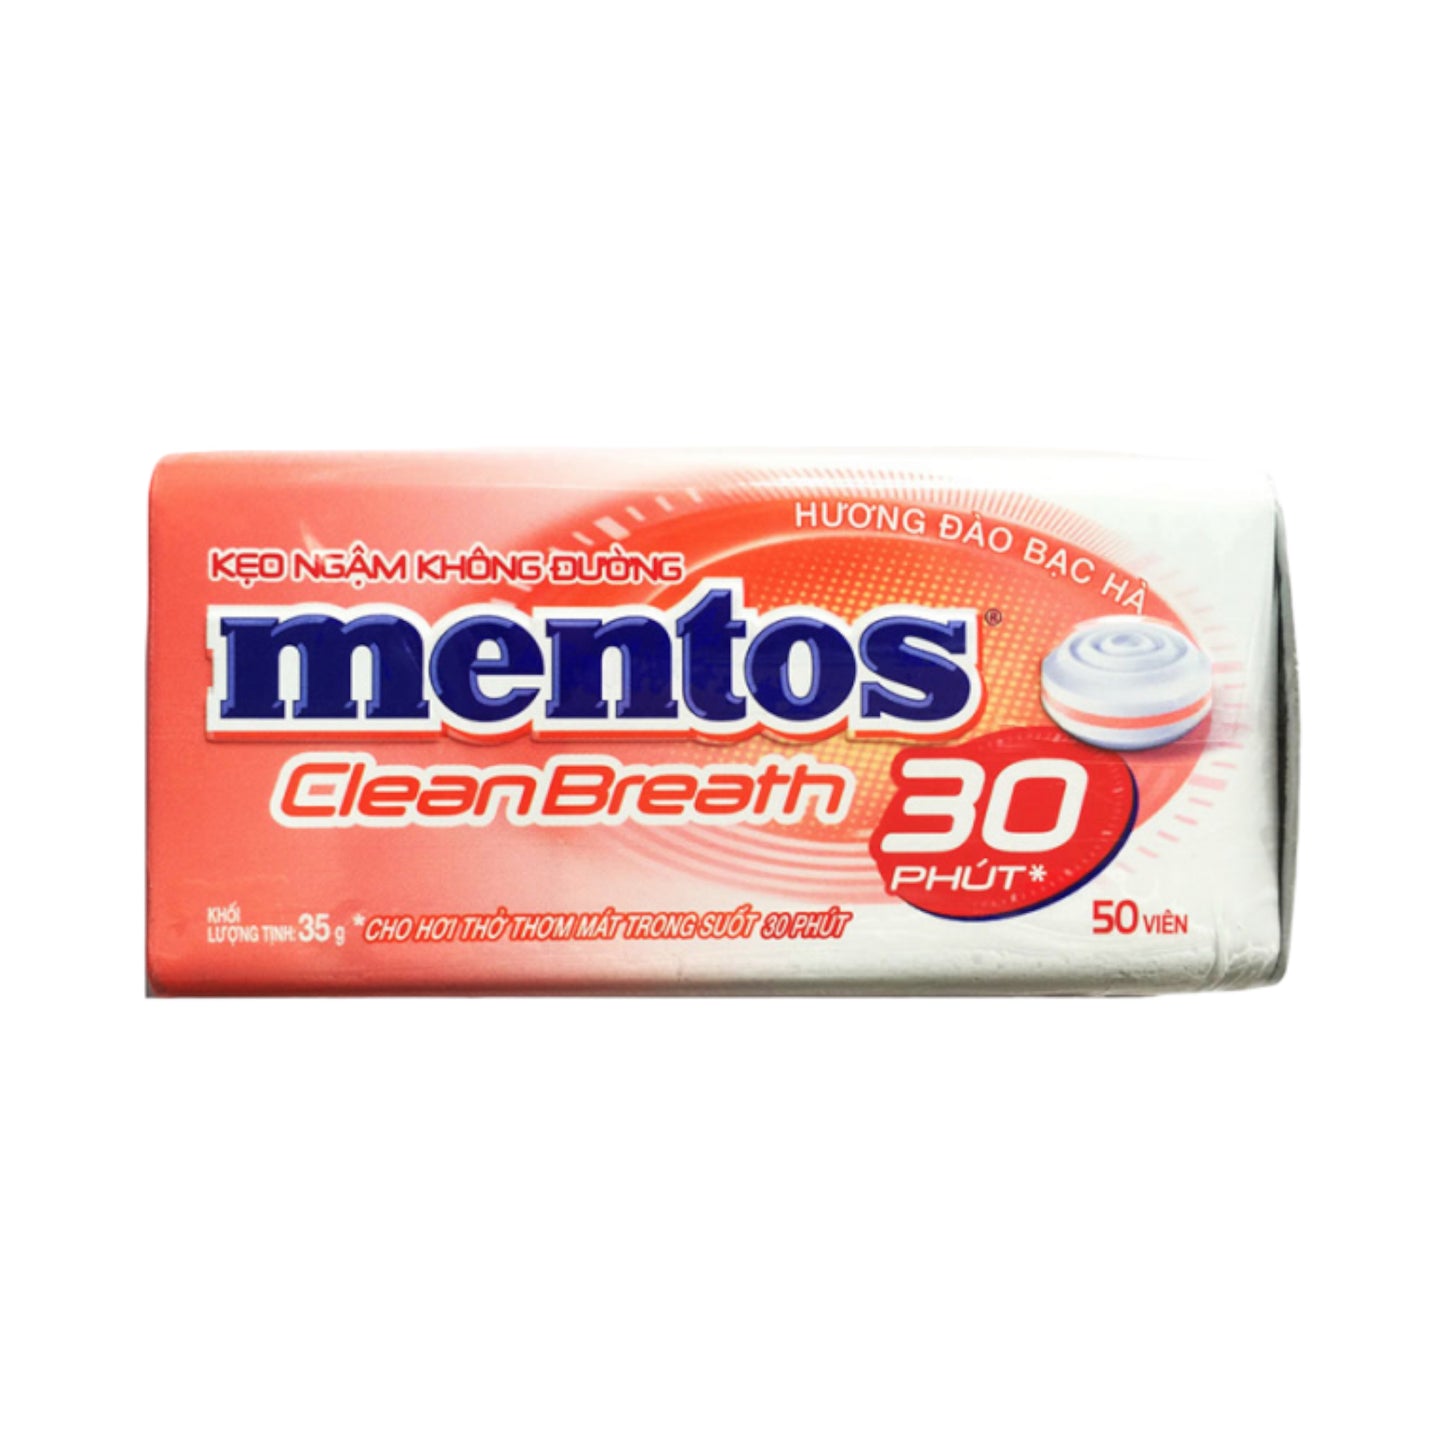 Mentos Clean Breath Peach Mints - 35g (Vietnam)